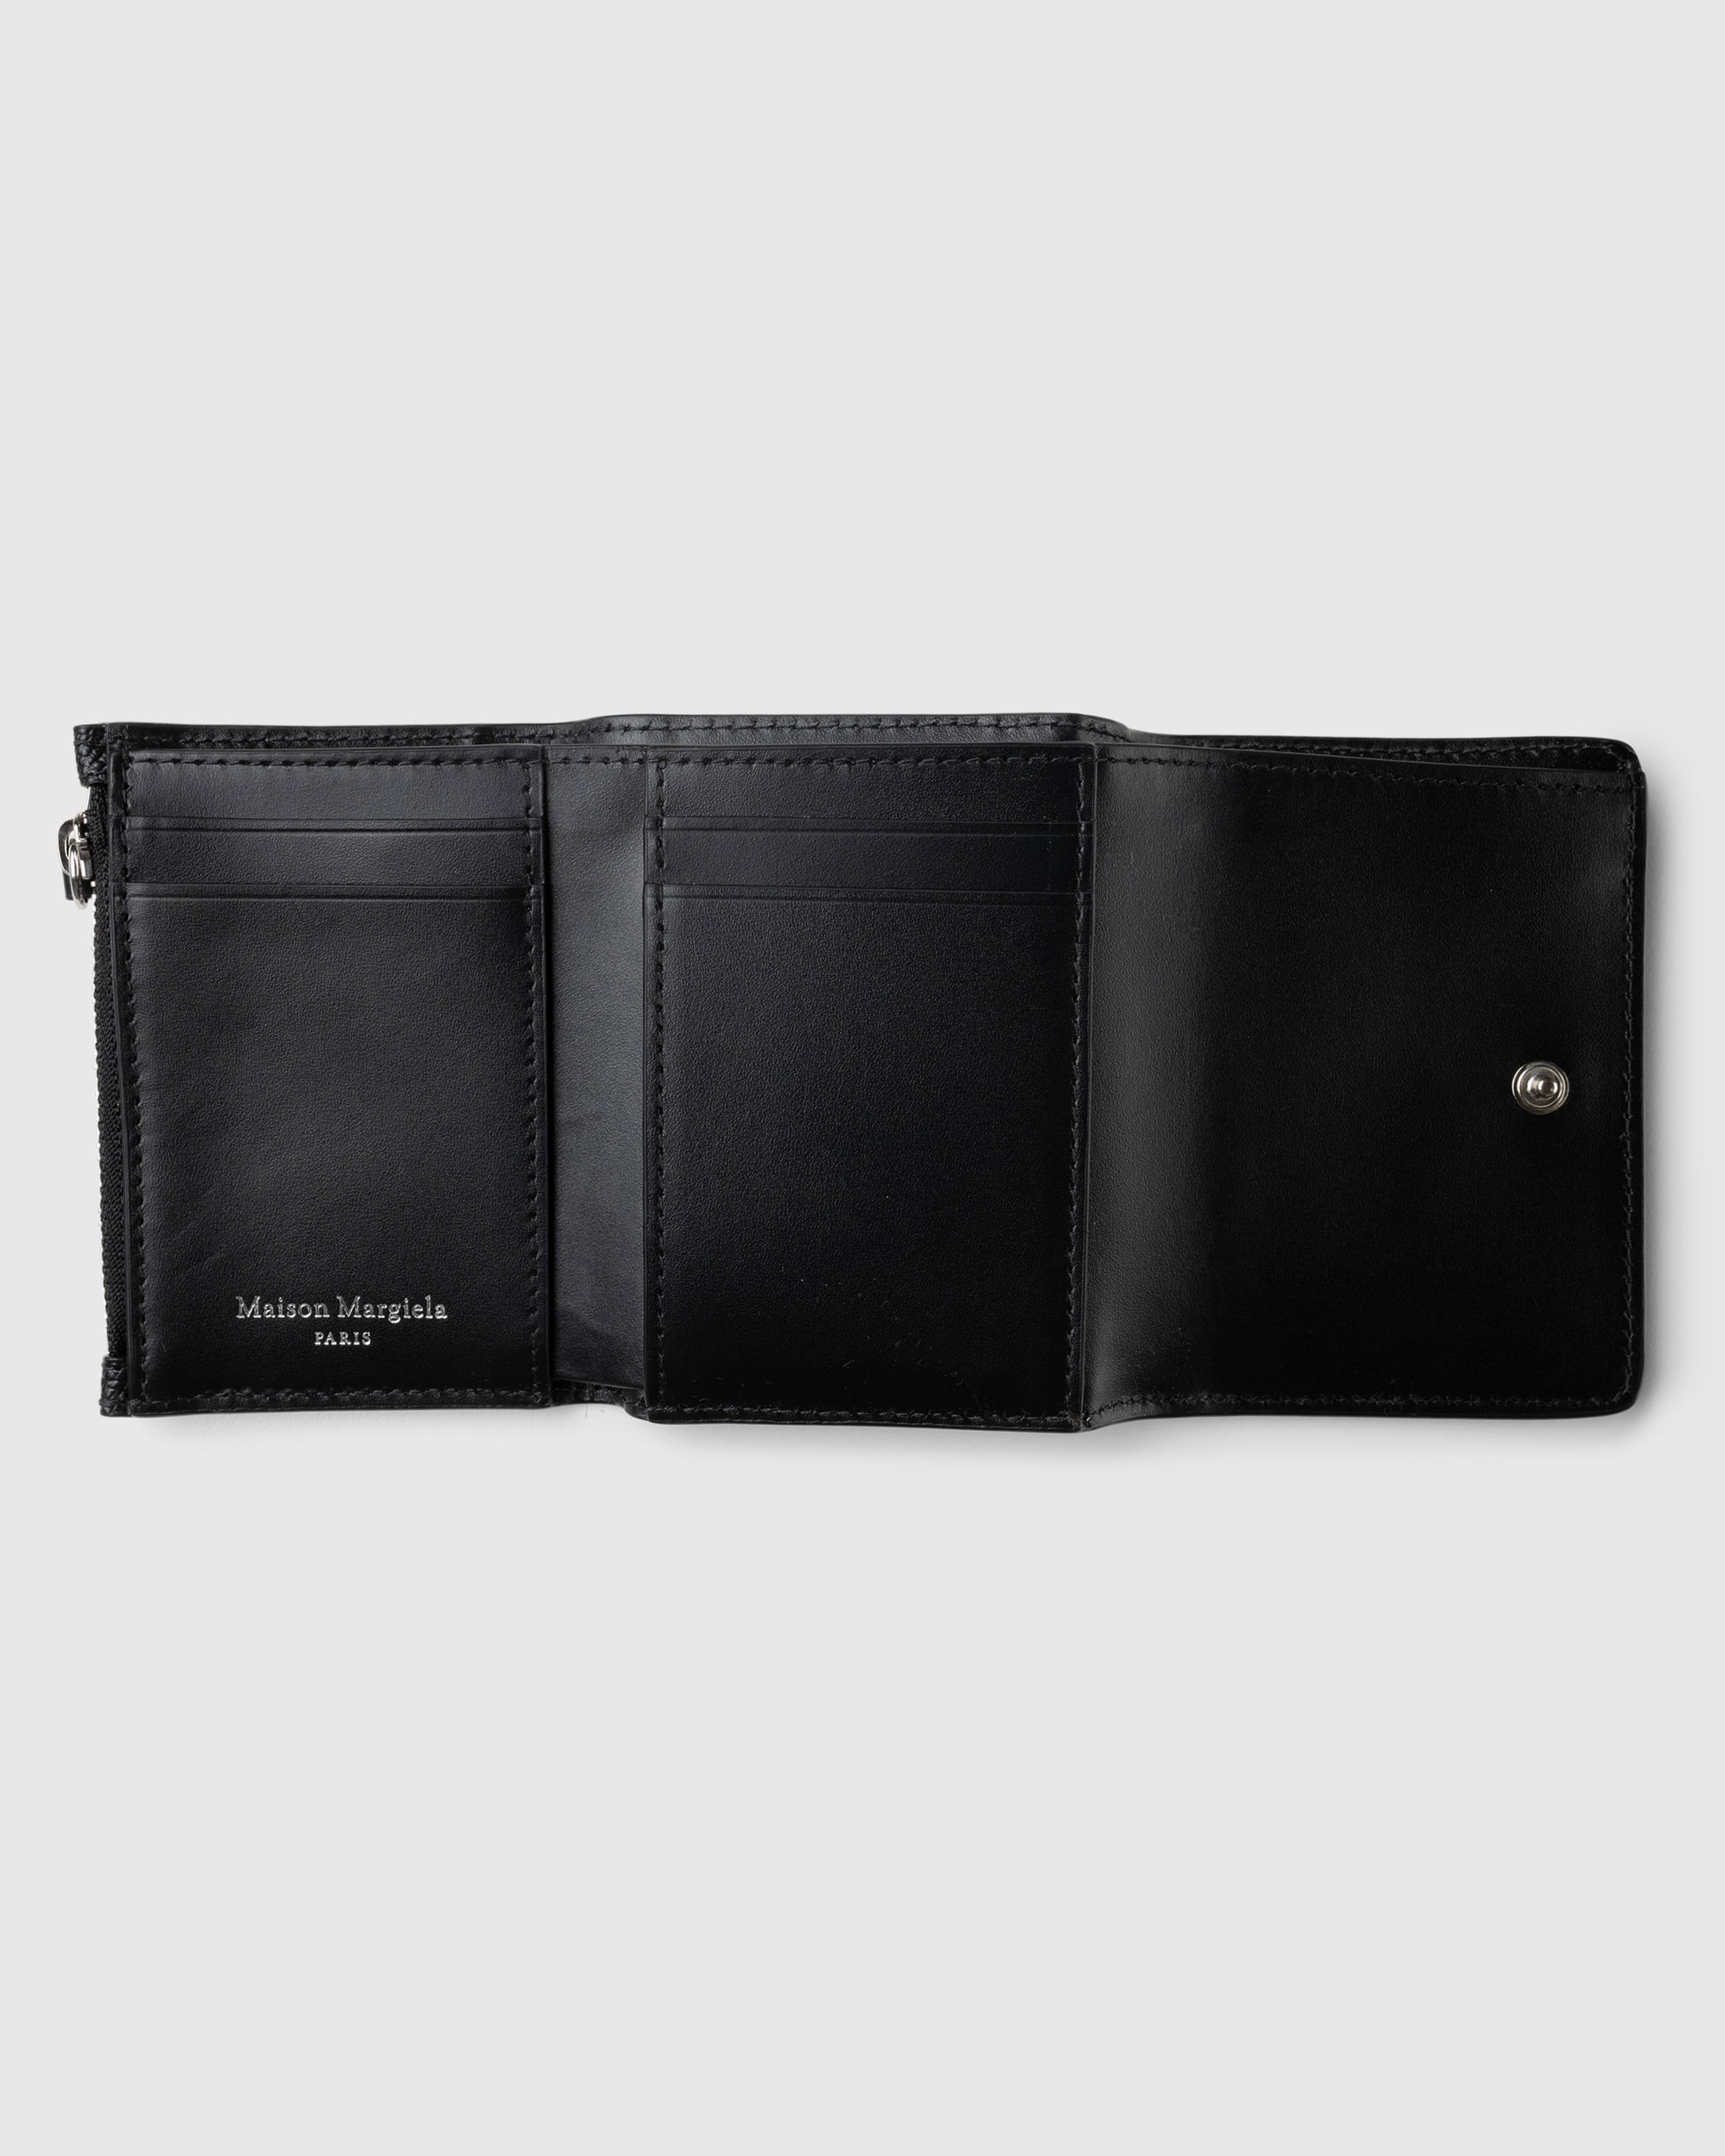 Maison Margiela - Tri-Fold Zip Wallet Black - Accessories - Black - Image 3